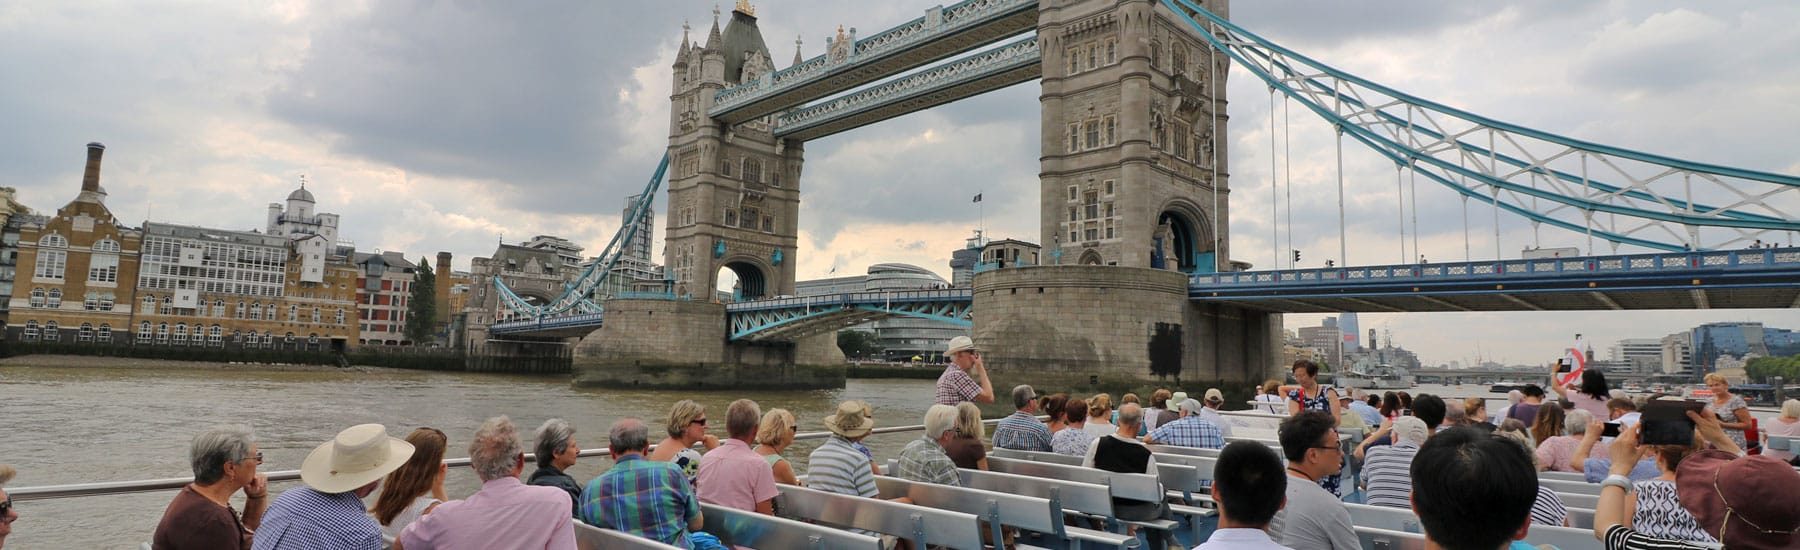 M.V Thomas Doggett passando per il Tower Bridge, Londra